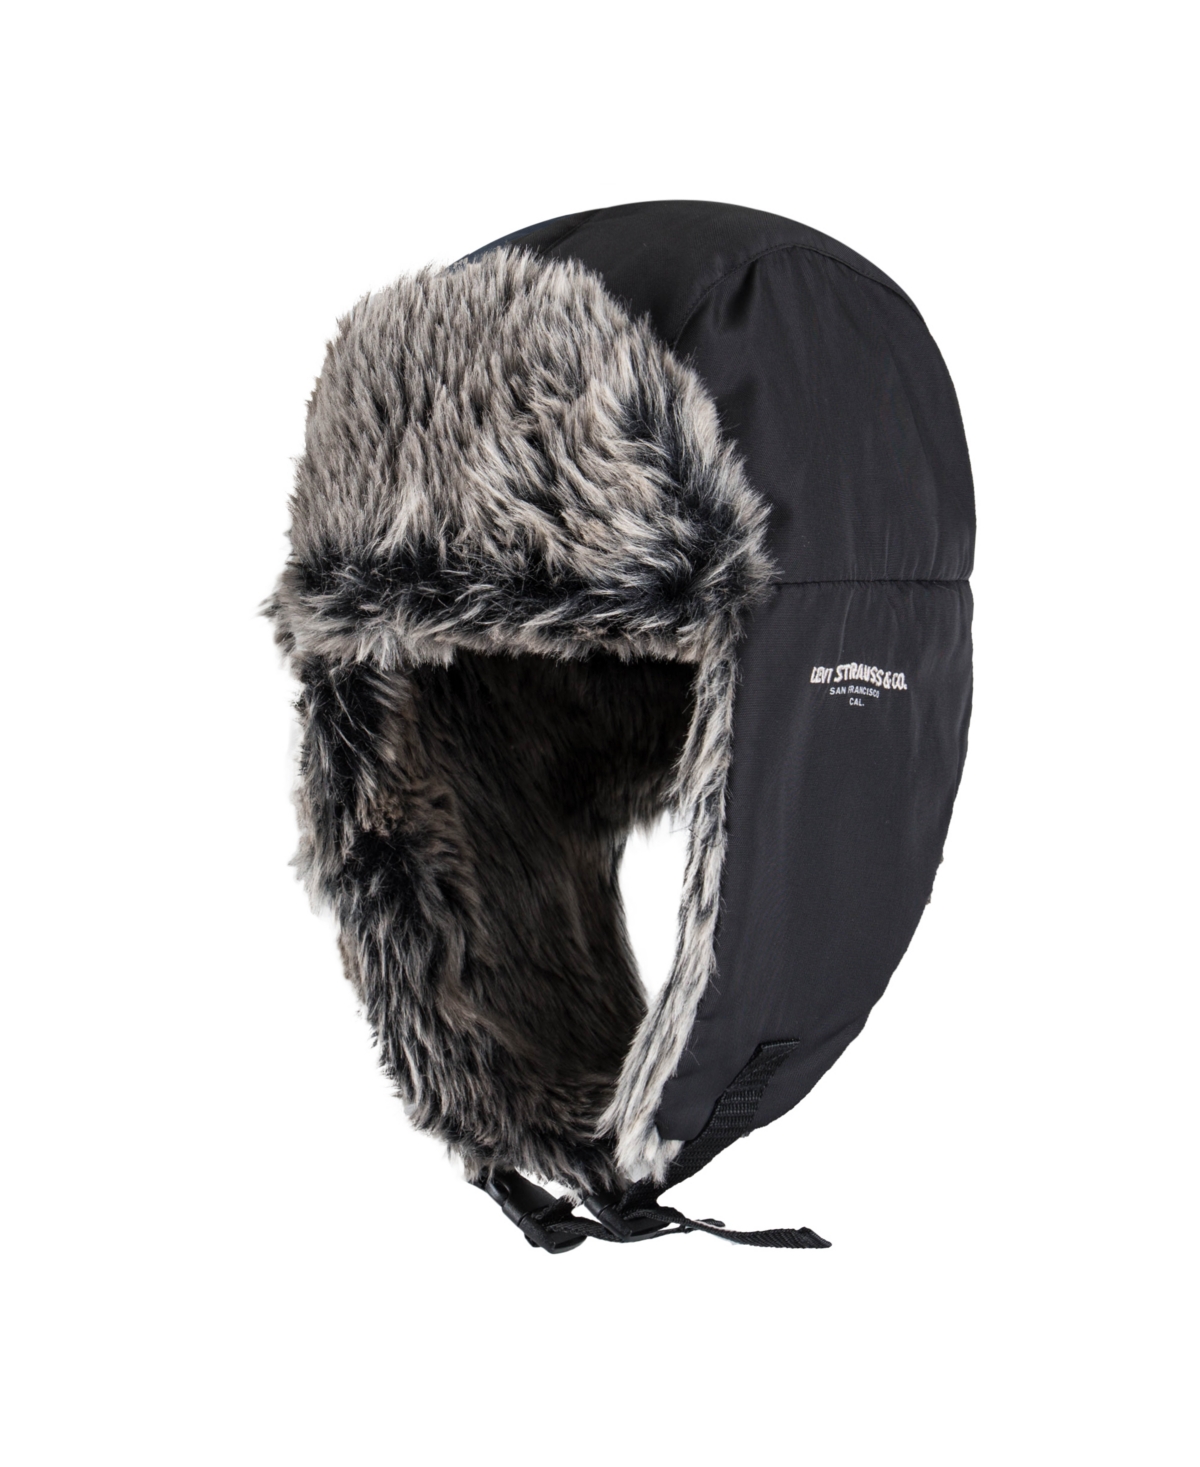 Men's Nylon Water Resistant Maximum Warmth Trapper Hat - Black